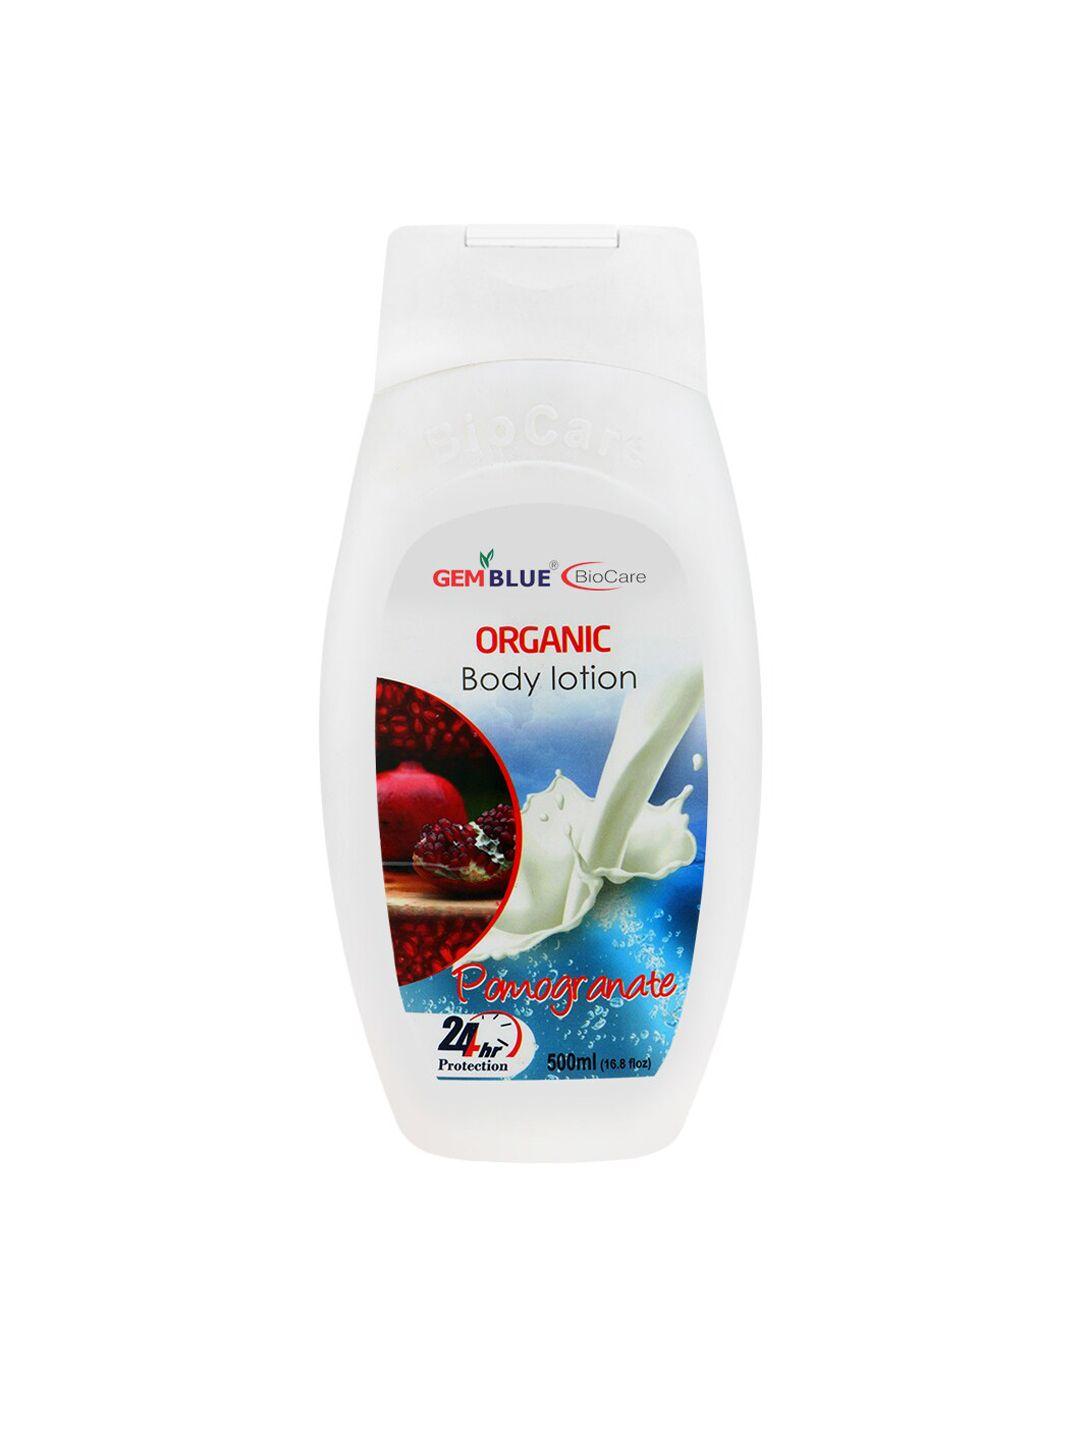 gemblue biocare organic body lotion 500ml